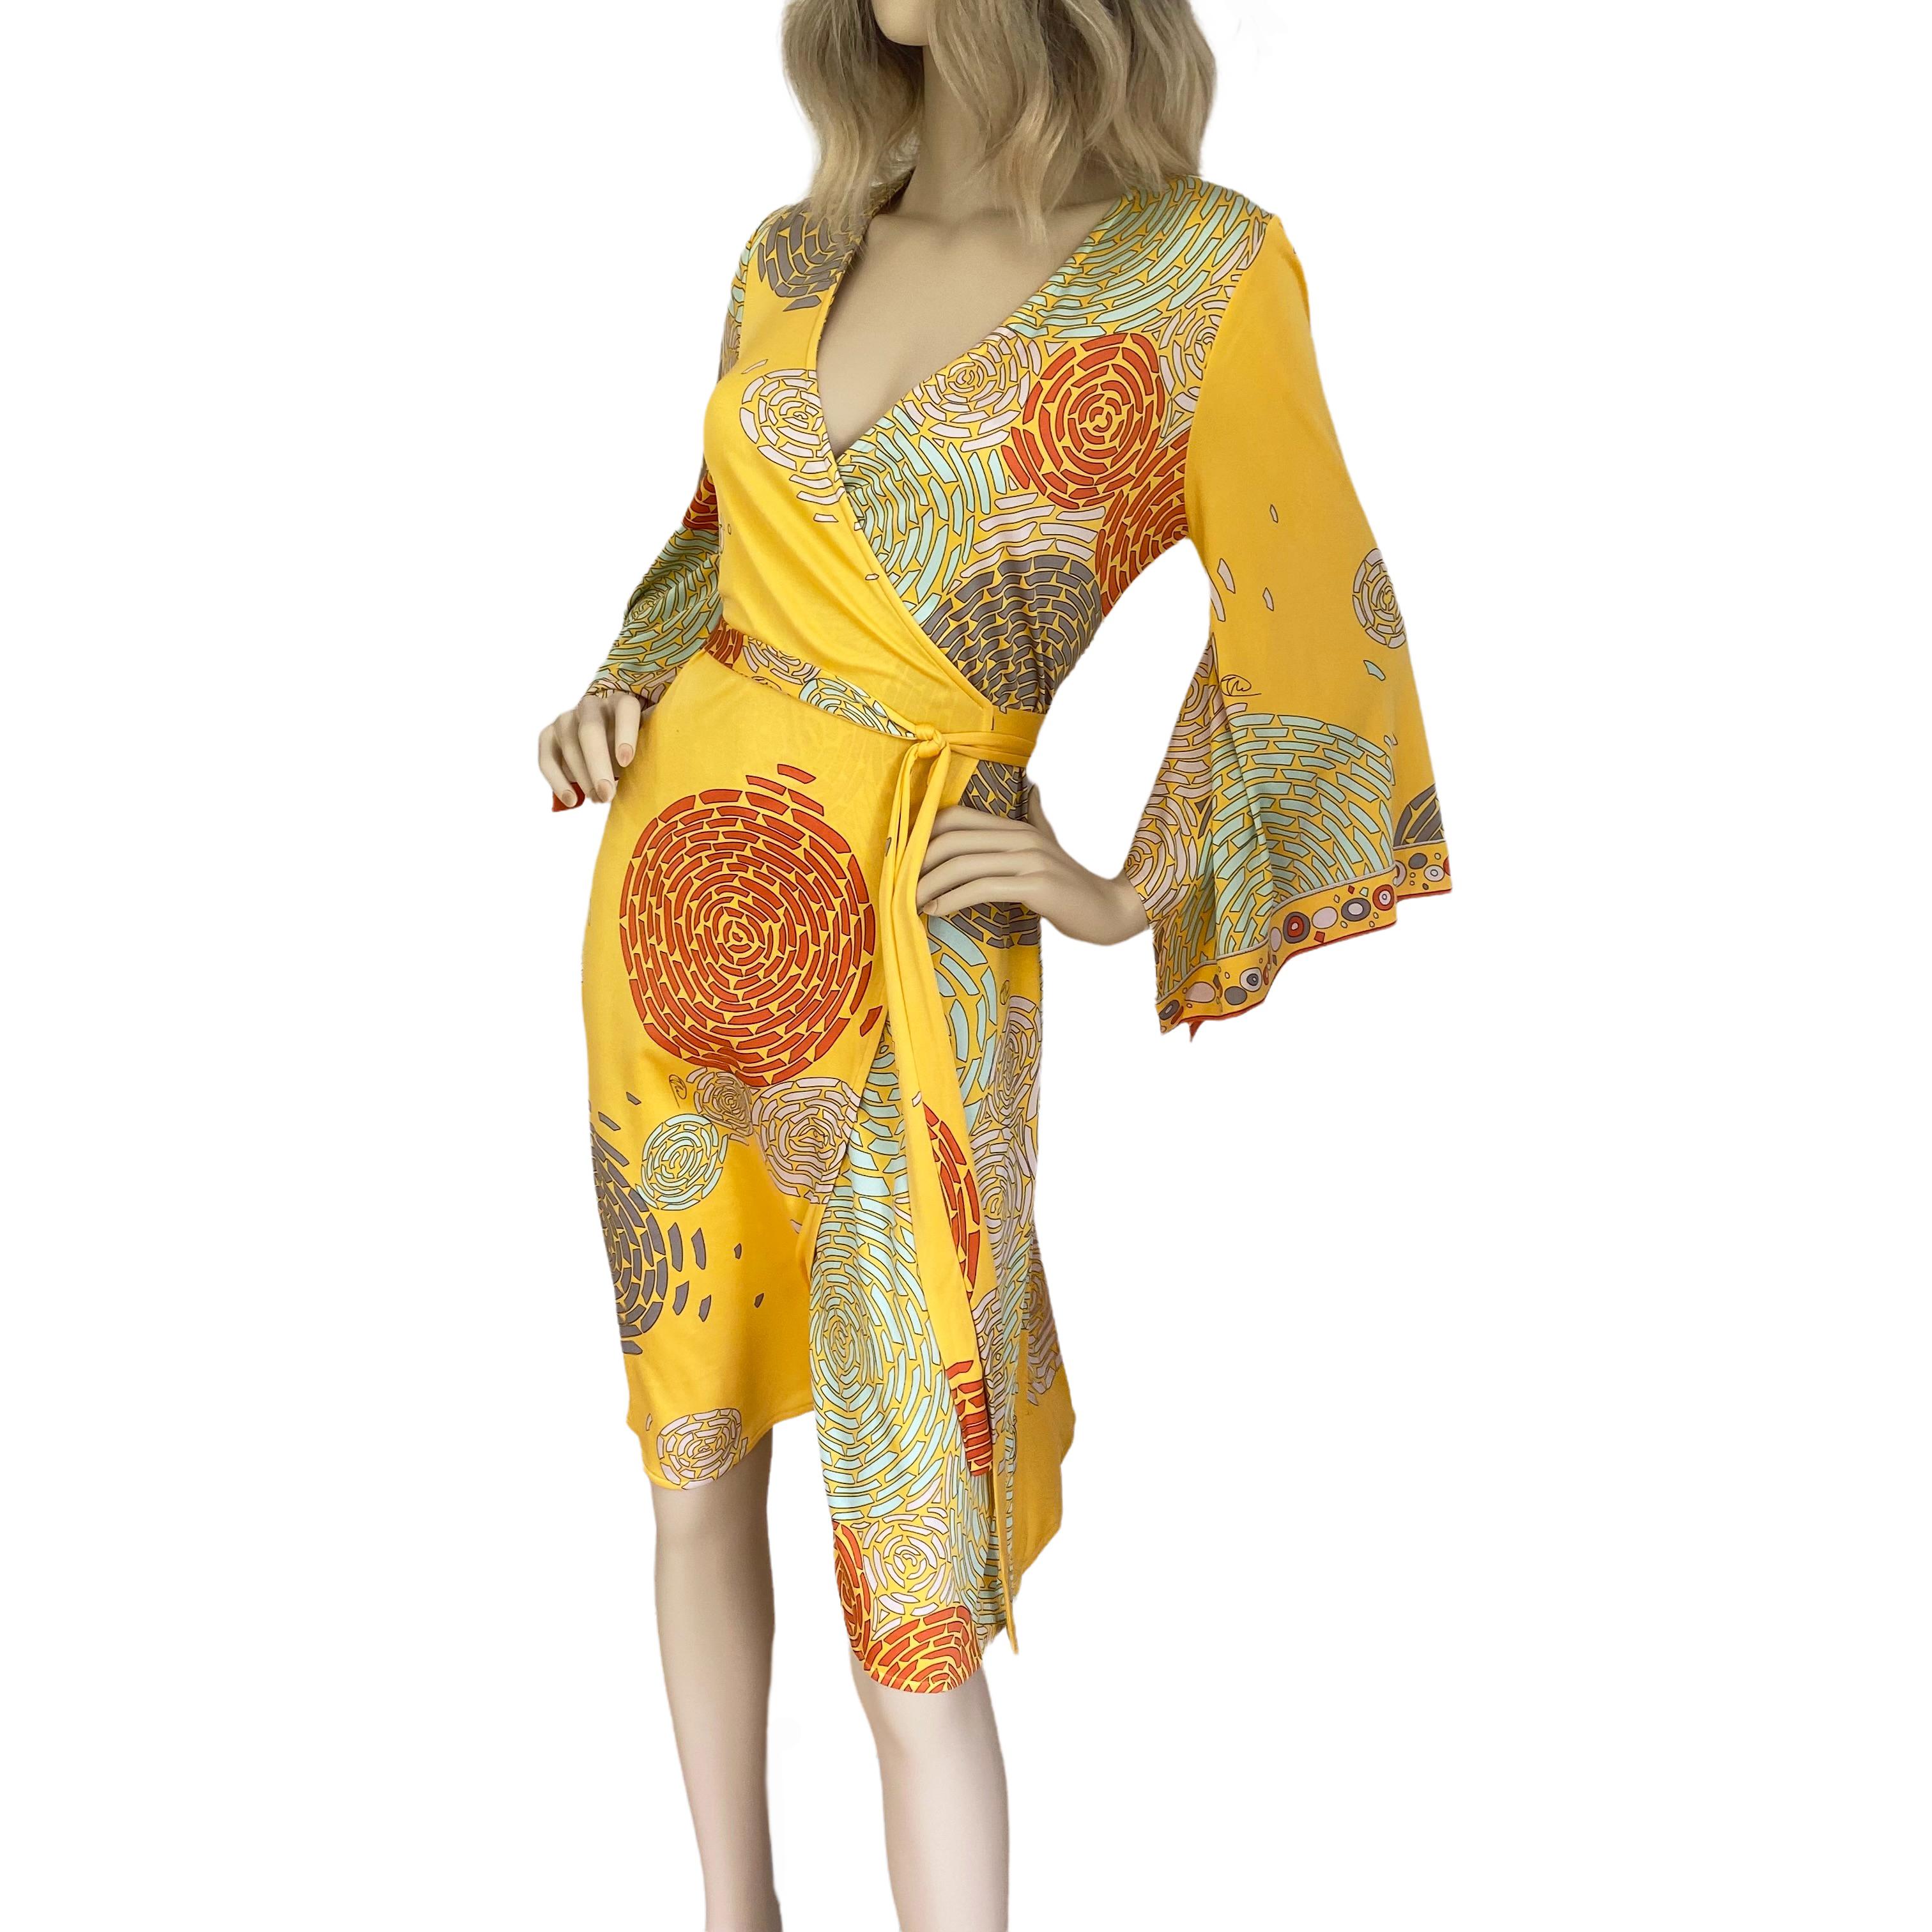  Beautiful true wrap dress with kimono flare sleeves.

Approximately 36